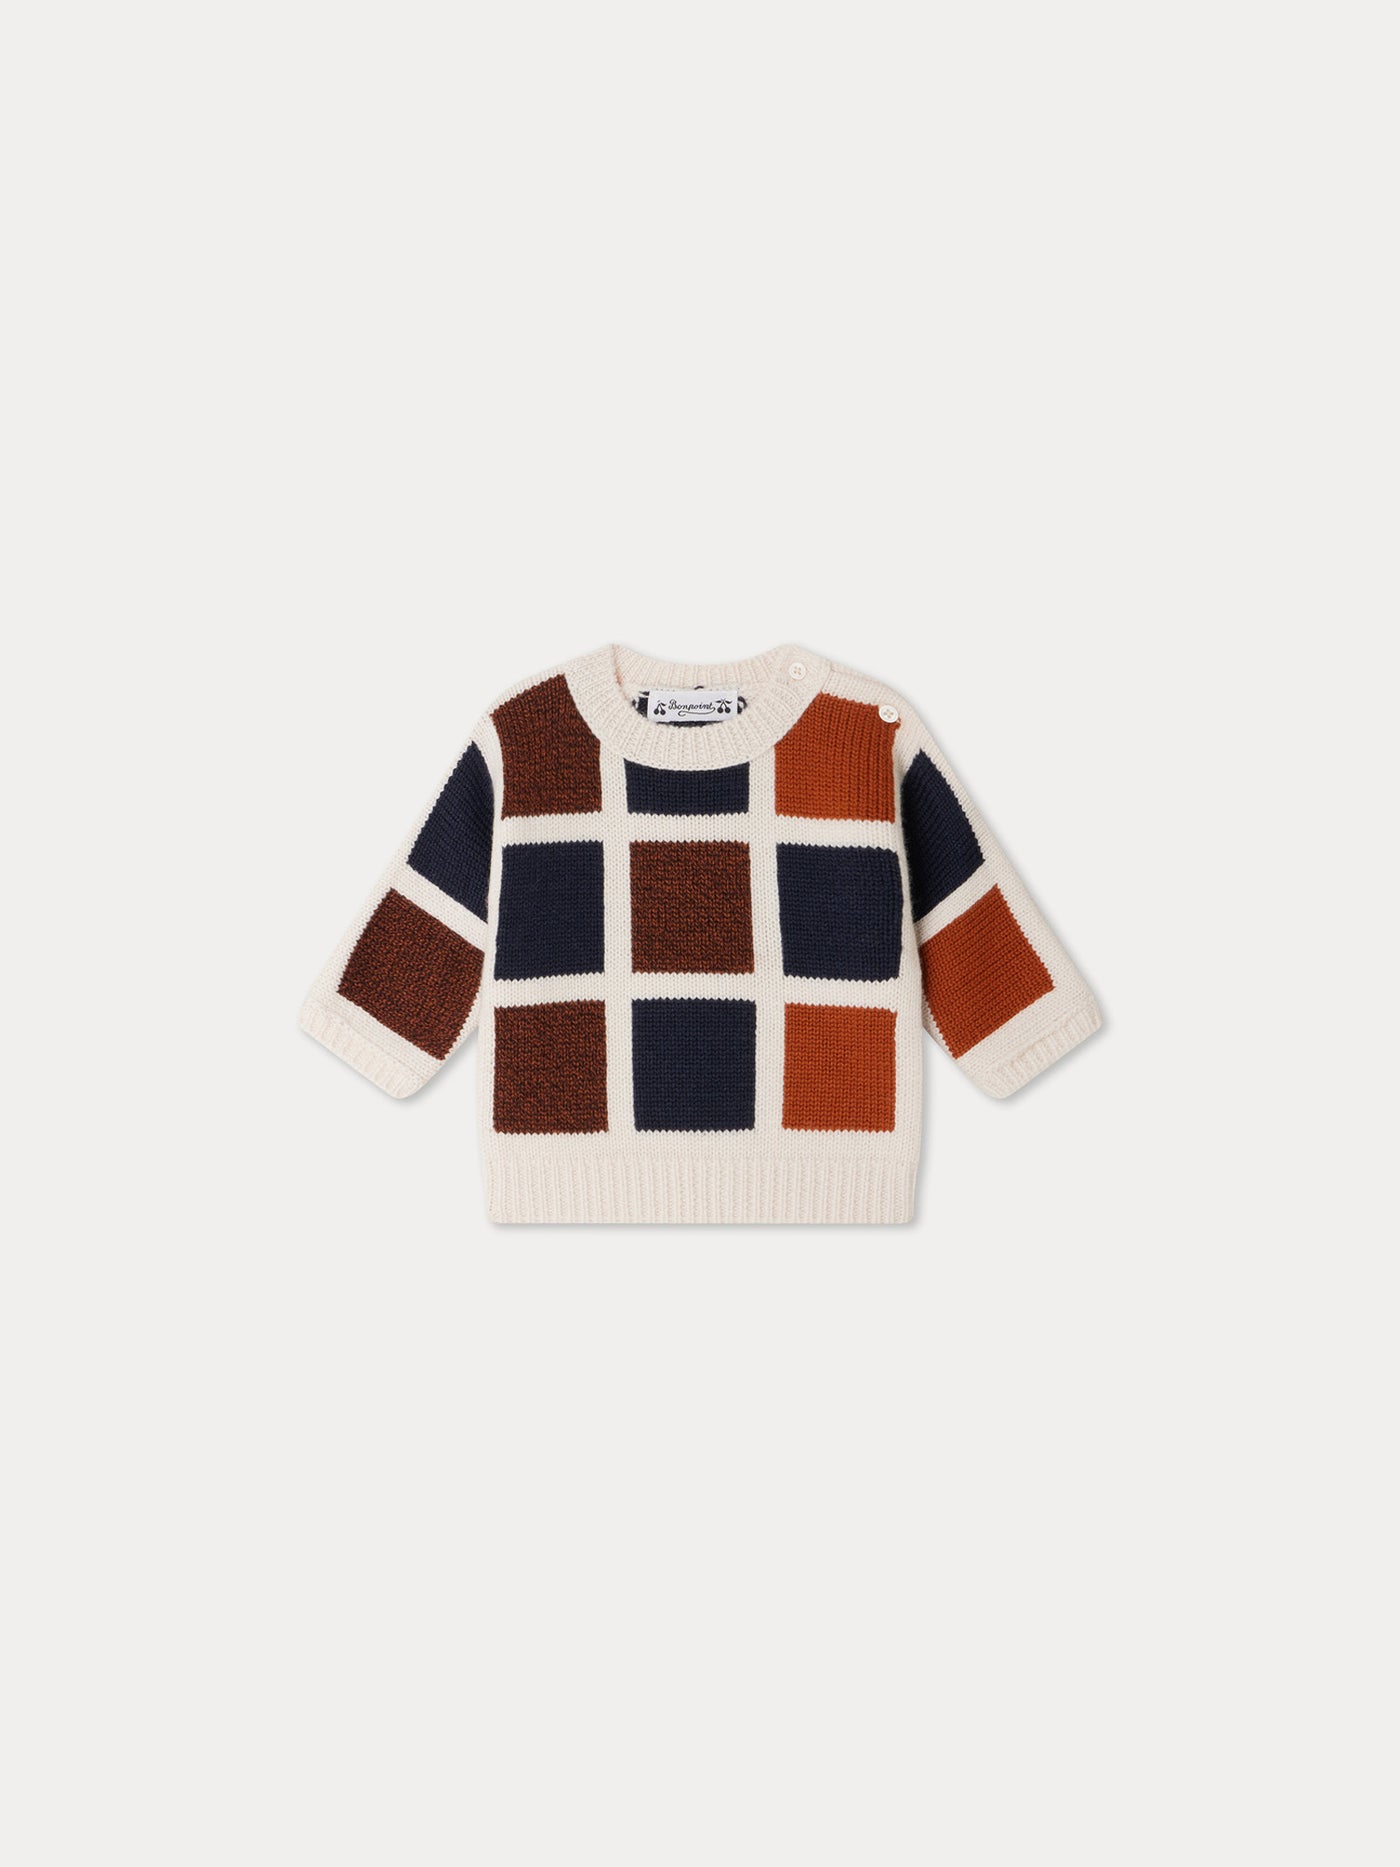 Gallen wool jacquard sweater